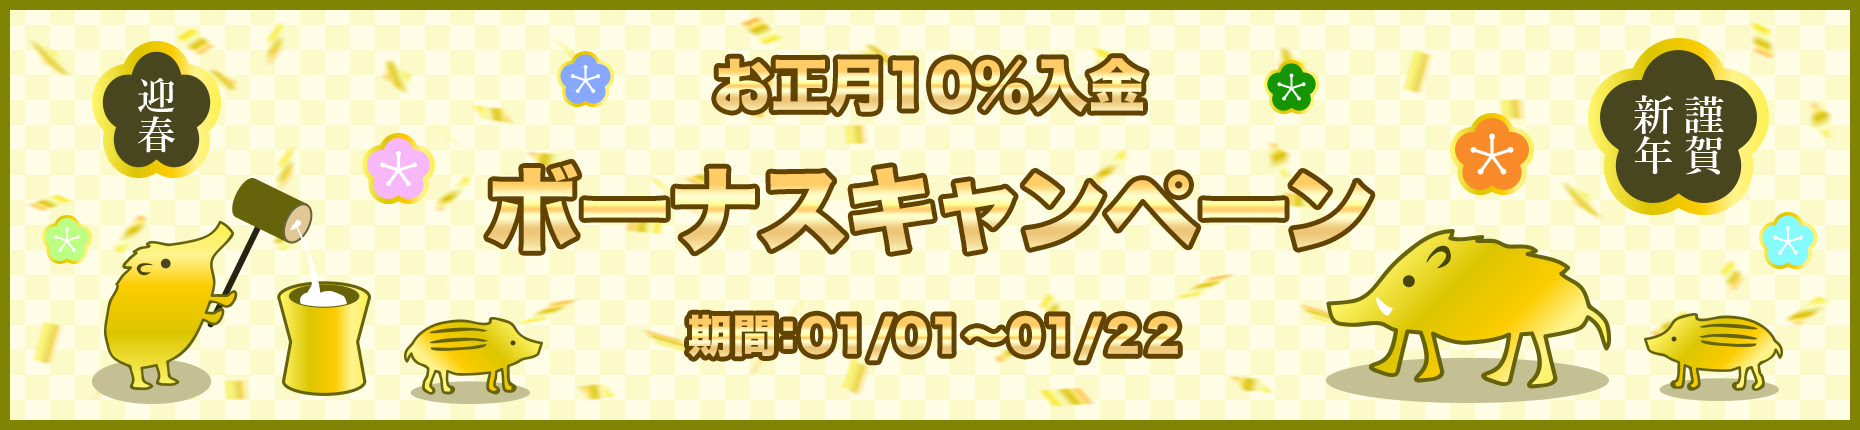 【FXDD】 10%お正月入金ボーナスキャンペーン